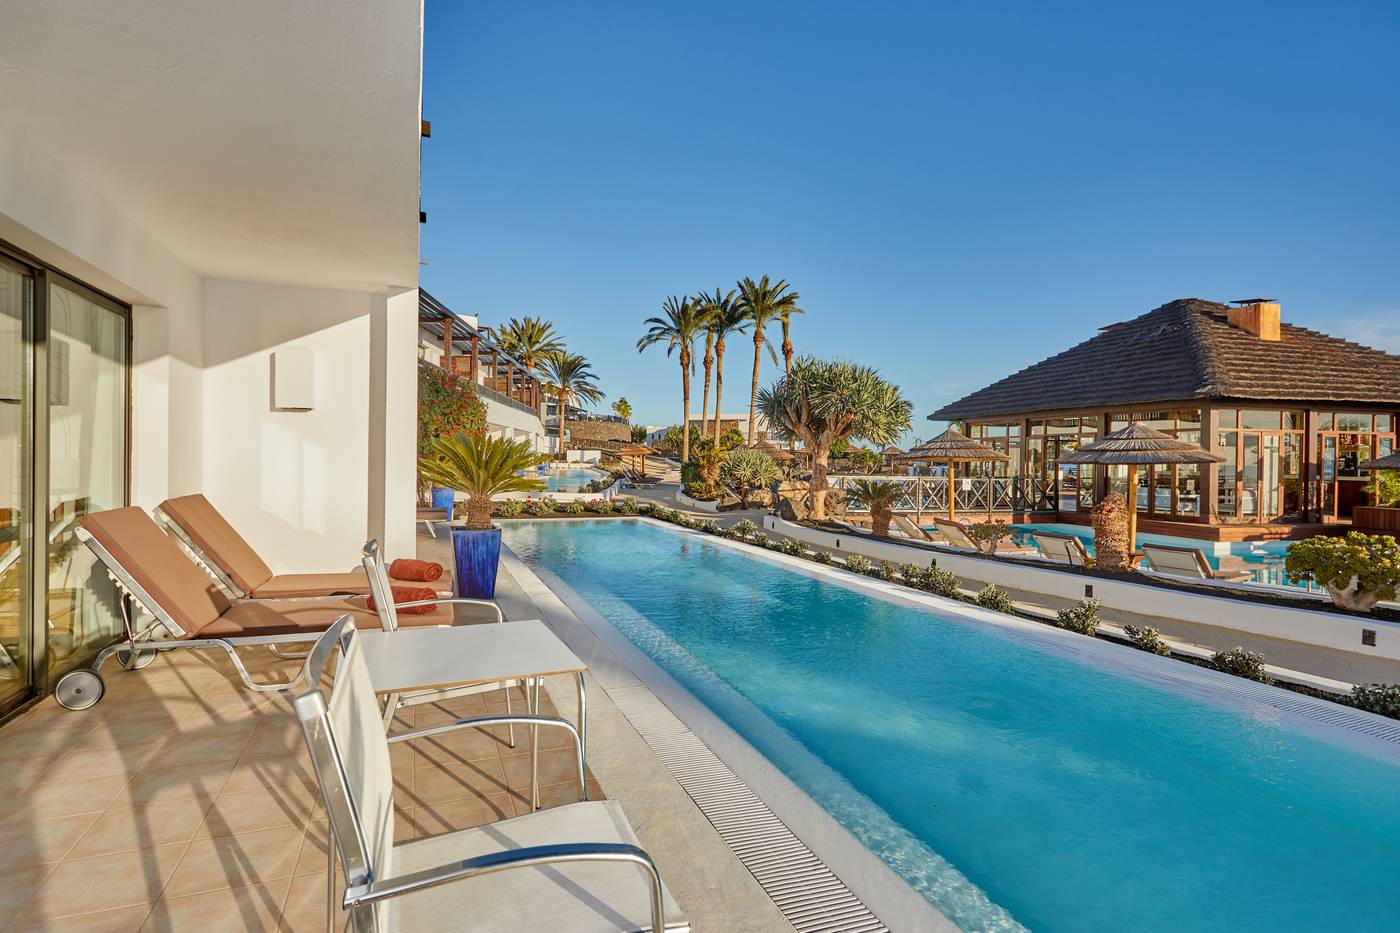 Secrets Lanzarote Resort & Spa - Adults Only in Canaries, Lanzarote, Spain